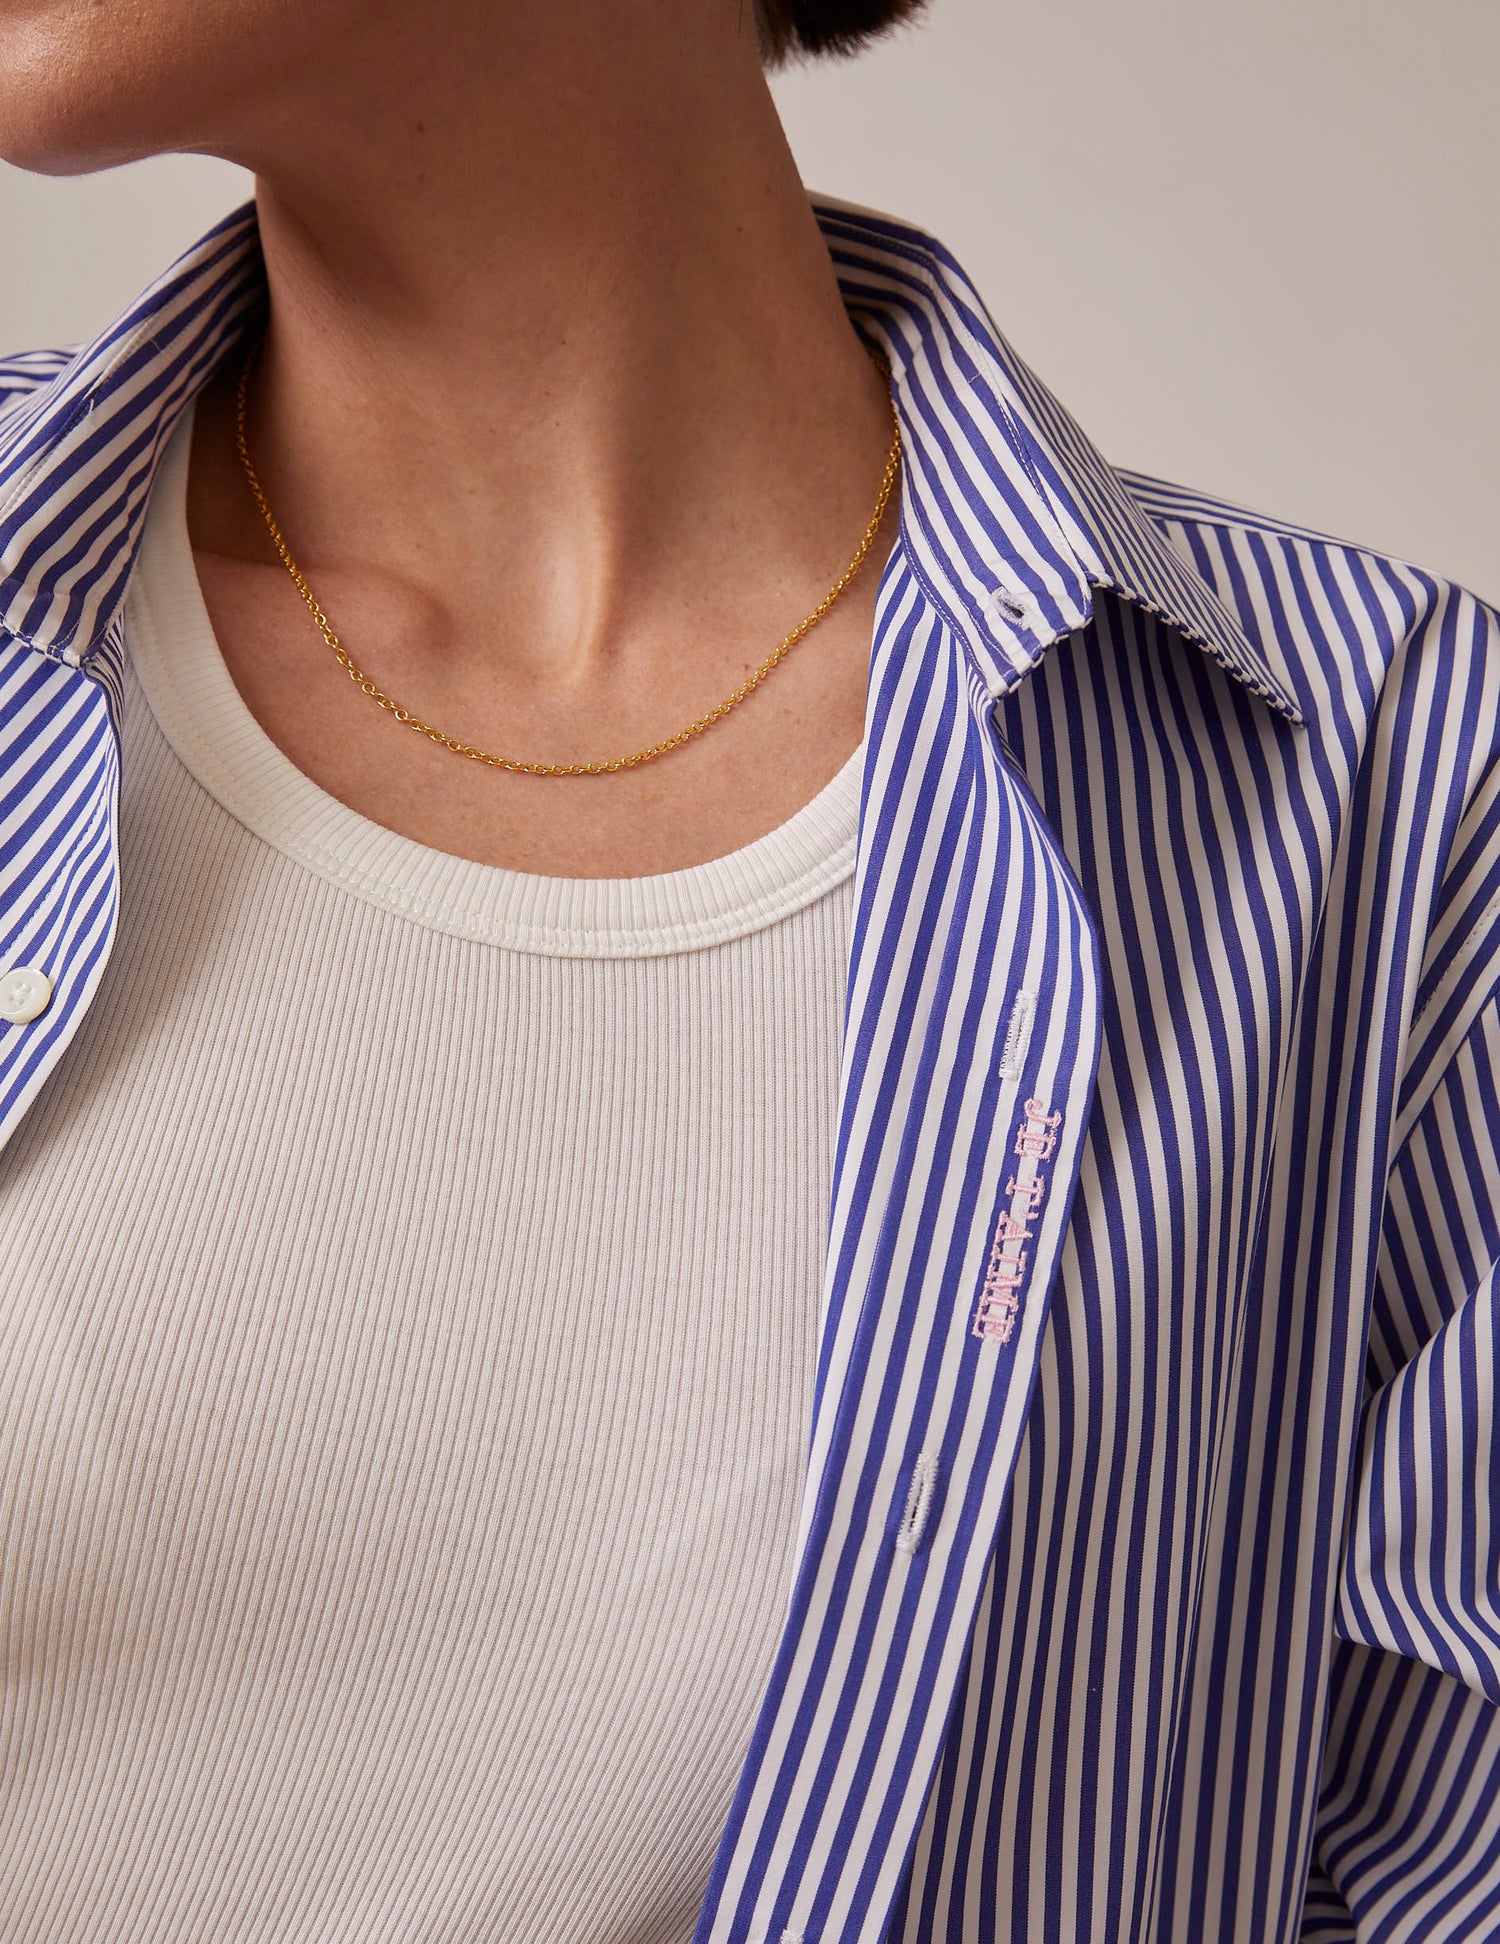 Unisex “Je t'aime” navy blue striped shirt - Poplin - Figaret Collar#7